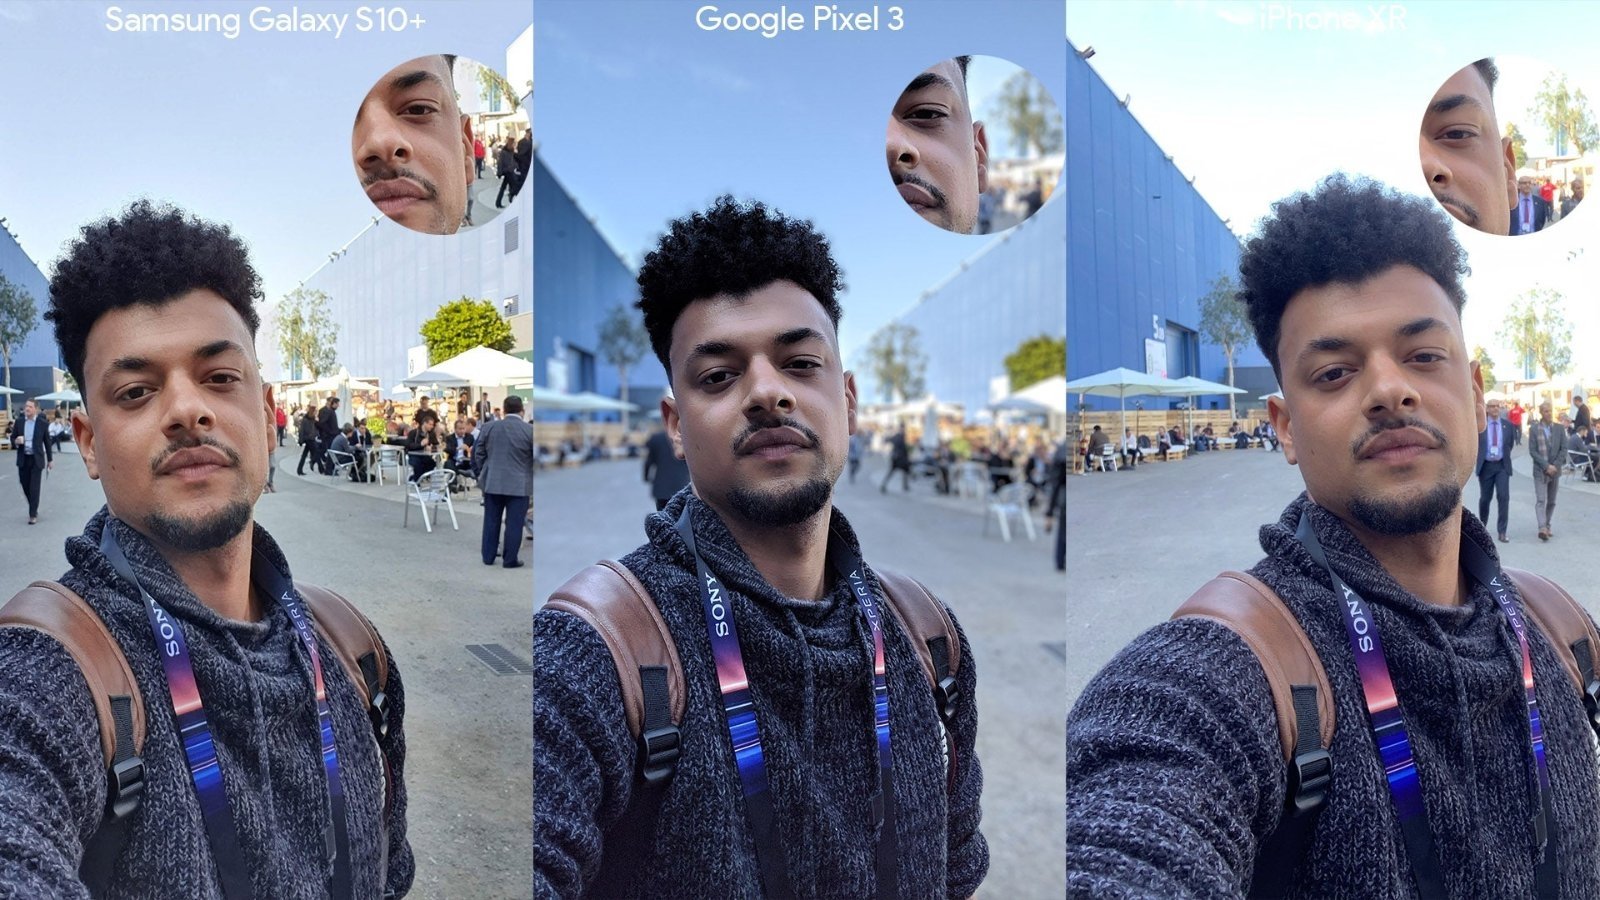 Samsung Galaxy S10 vs Google Pixel 3 vs iPhone XR selfie 1